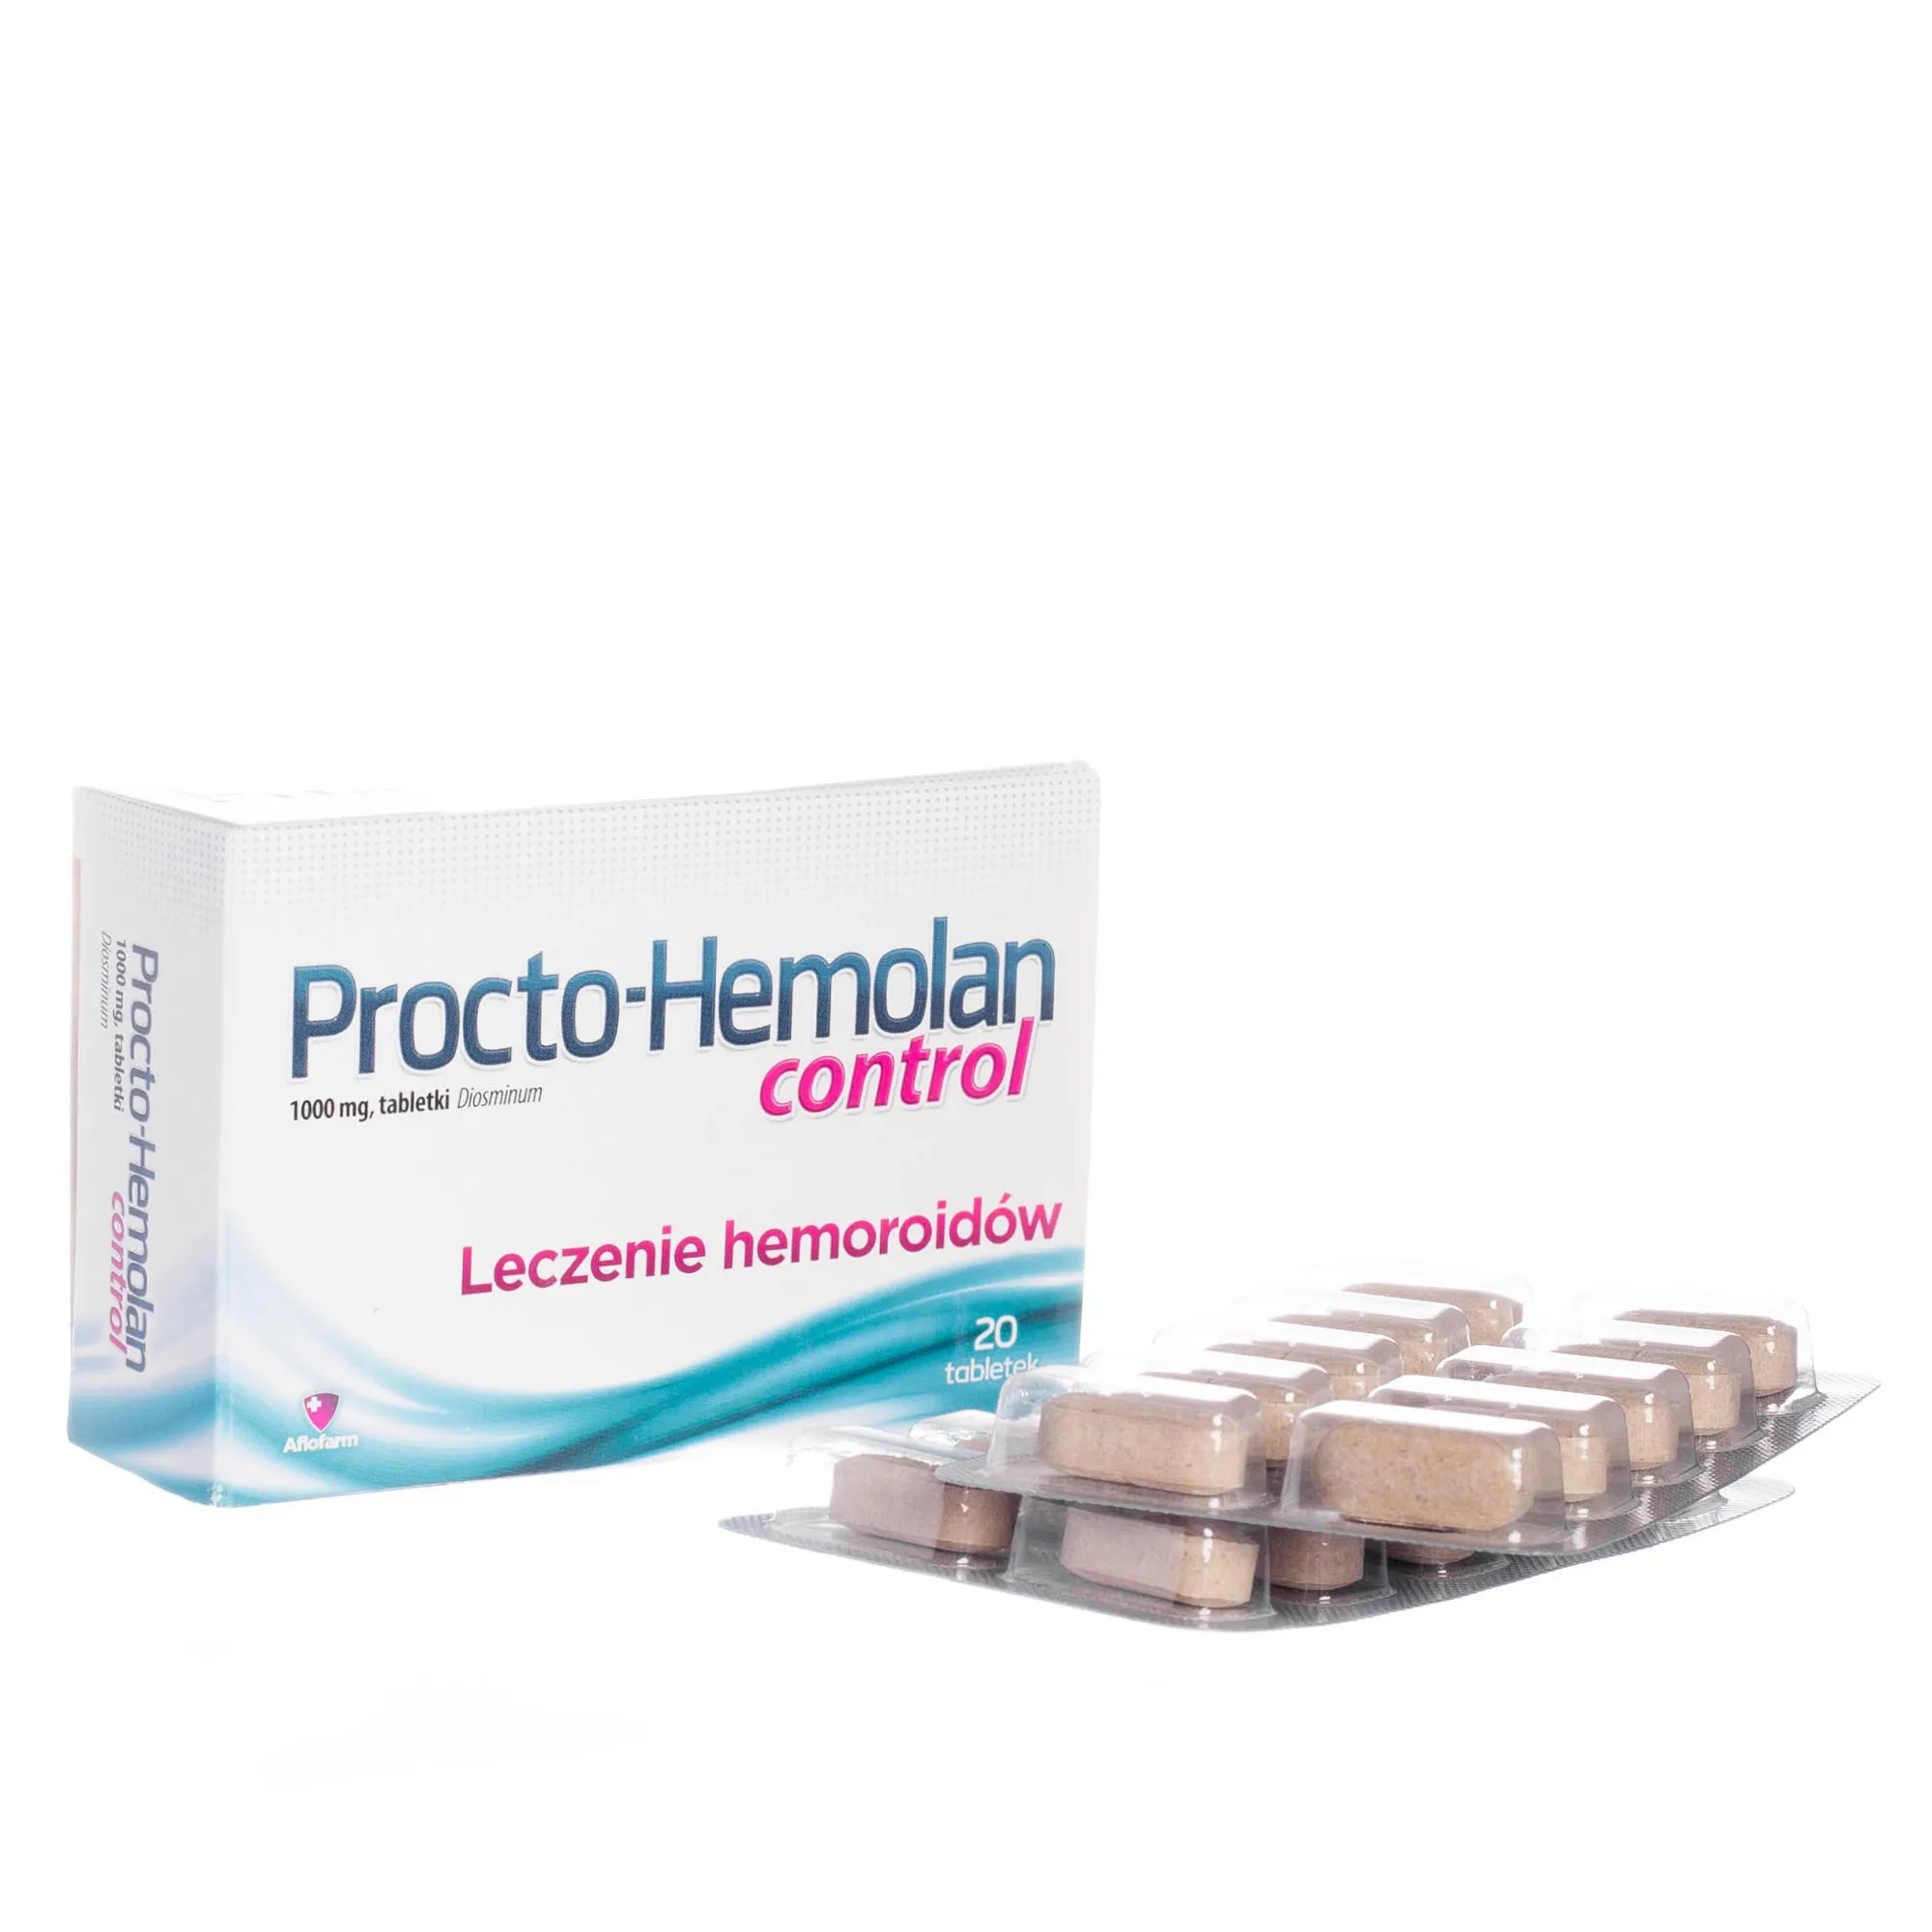 Procto-Hemolan control, Diosminum 1000 mg, 20 tabletek